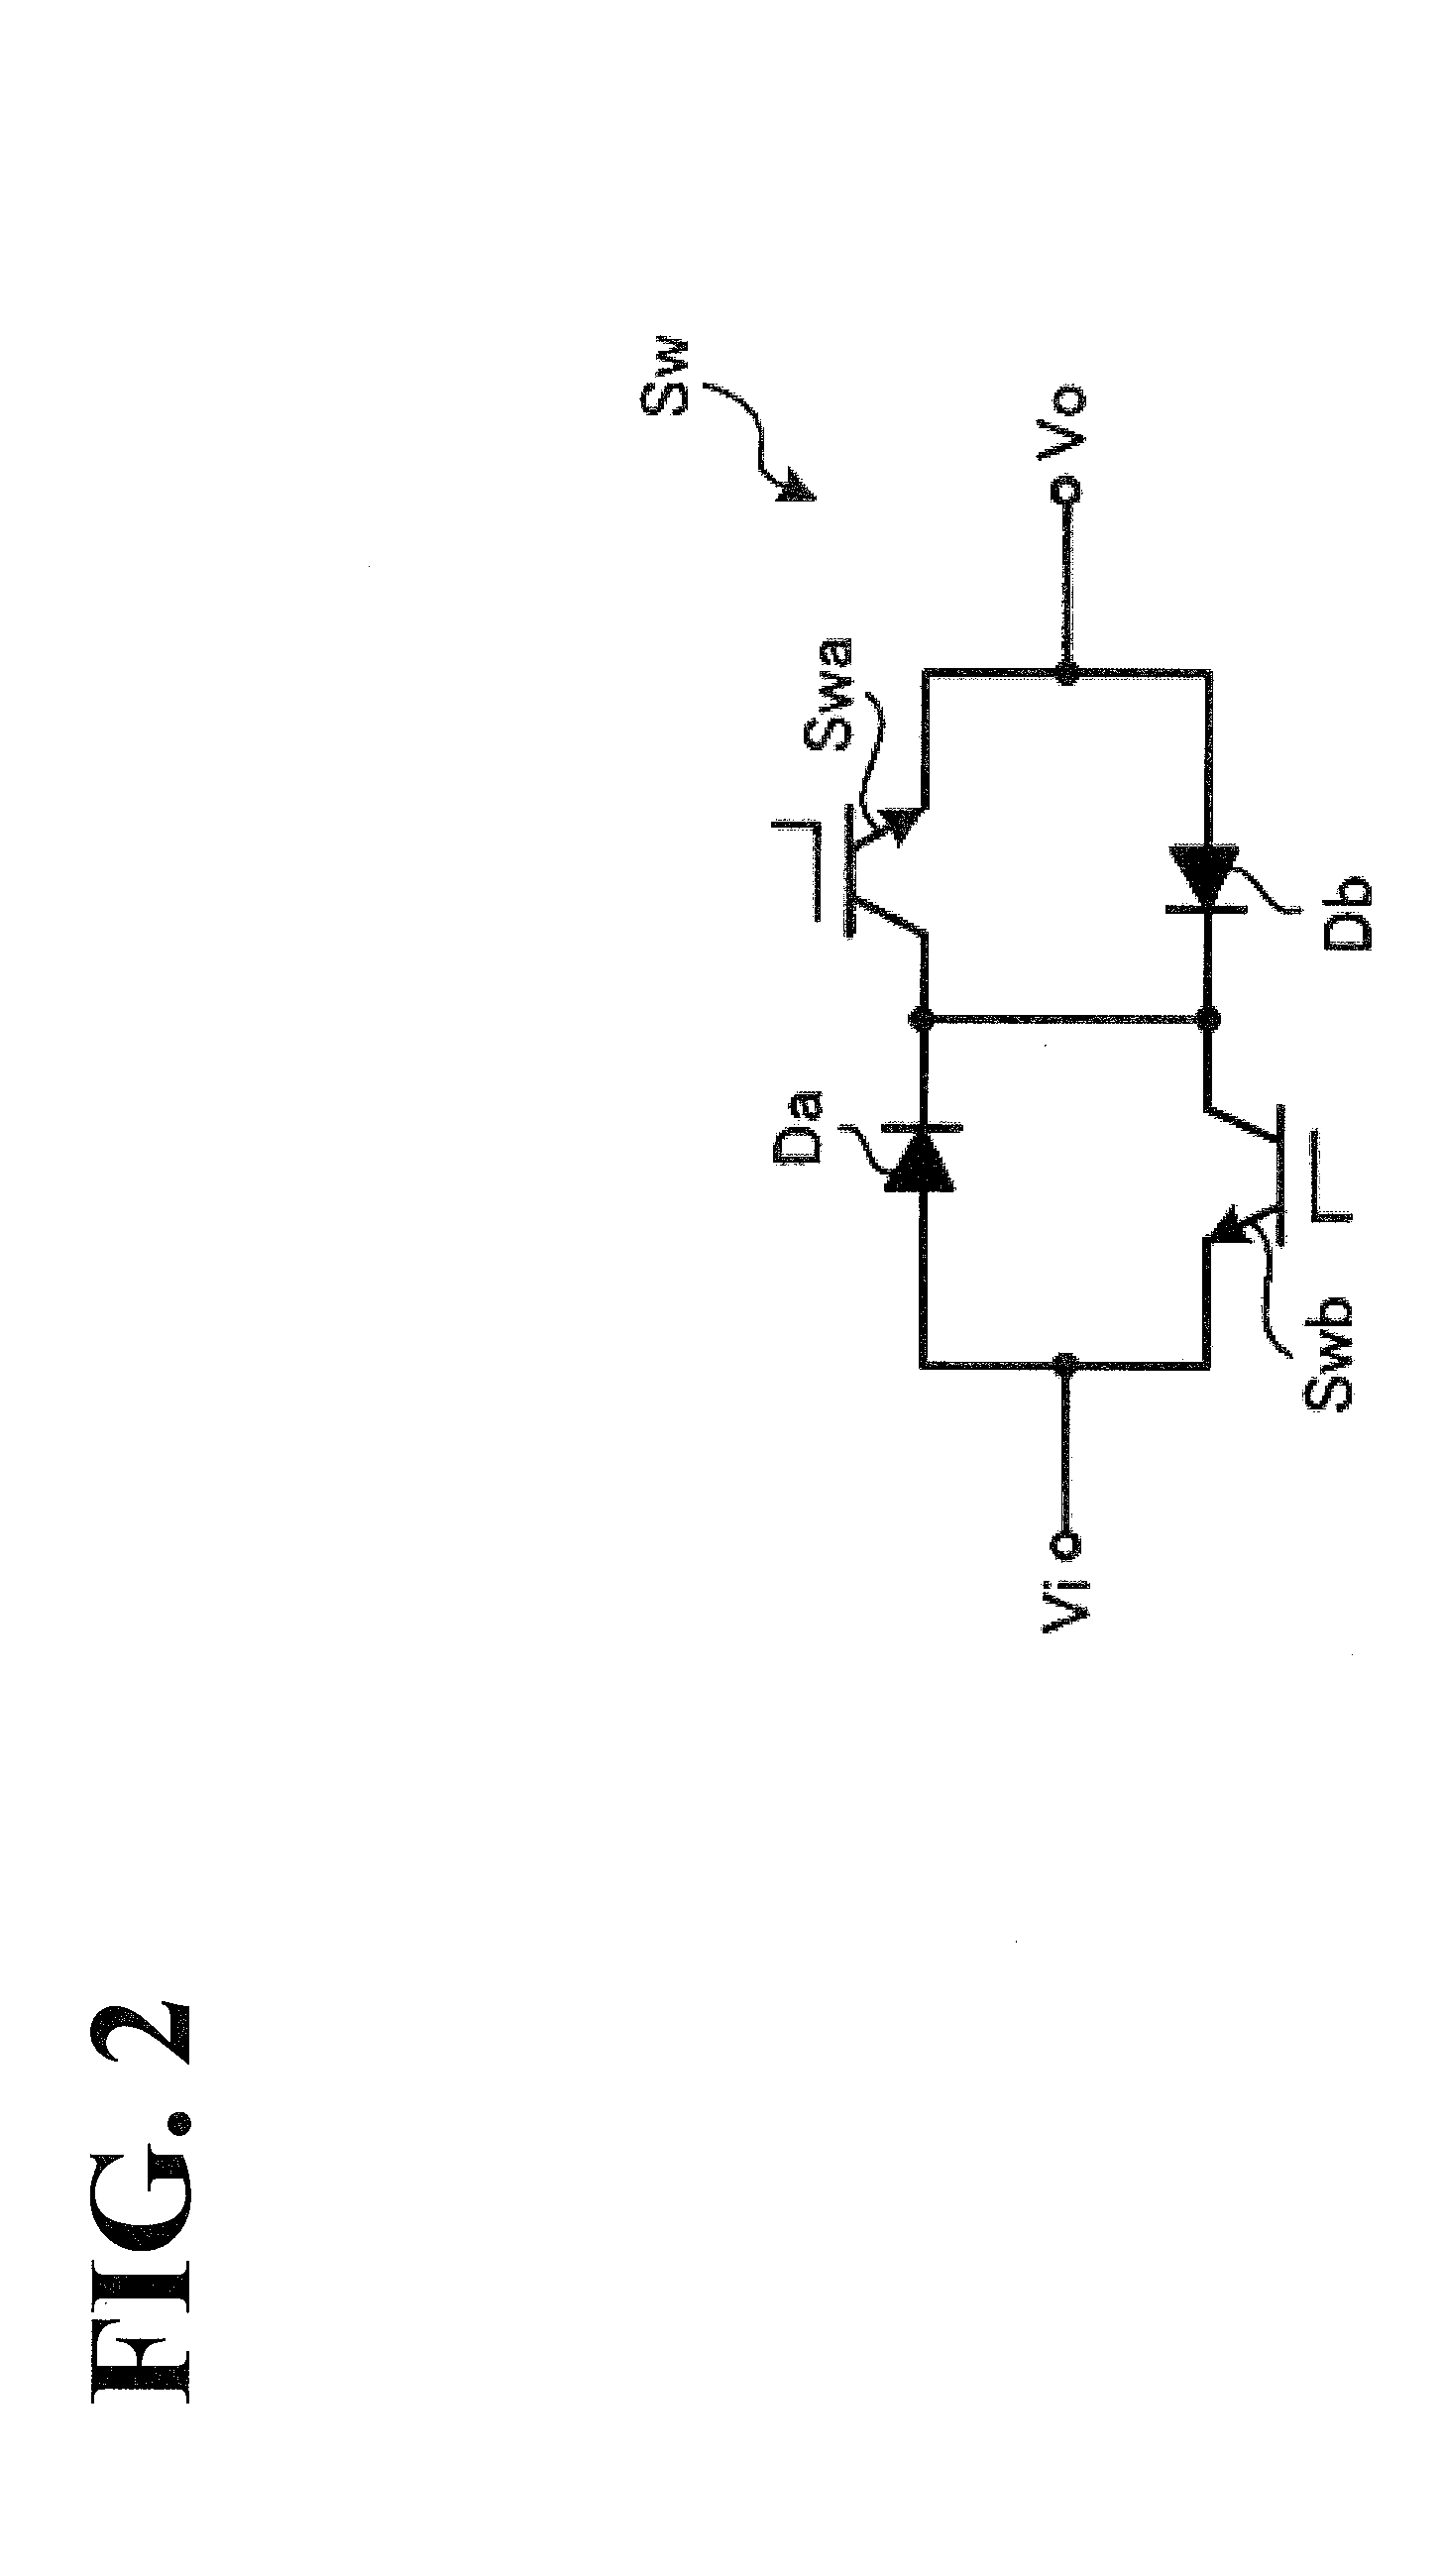 Matrix converter and method for compensating for output voltage error